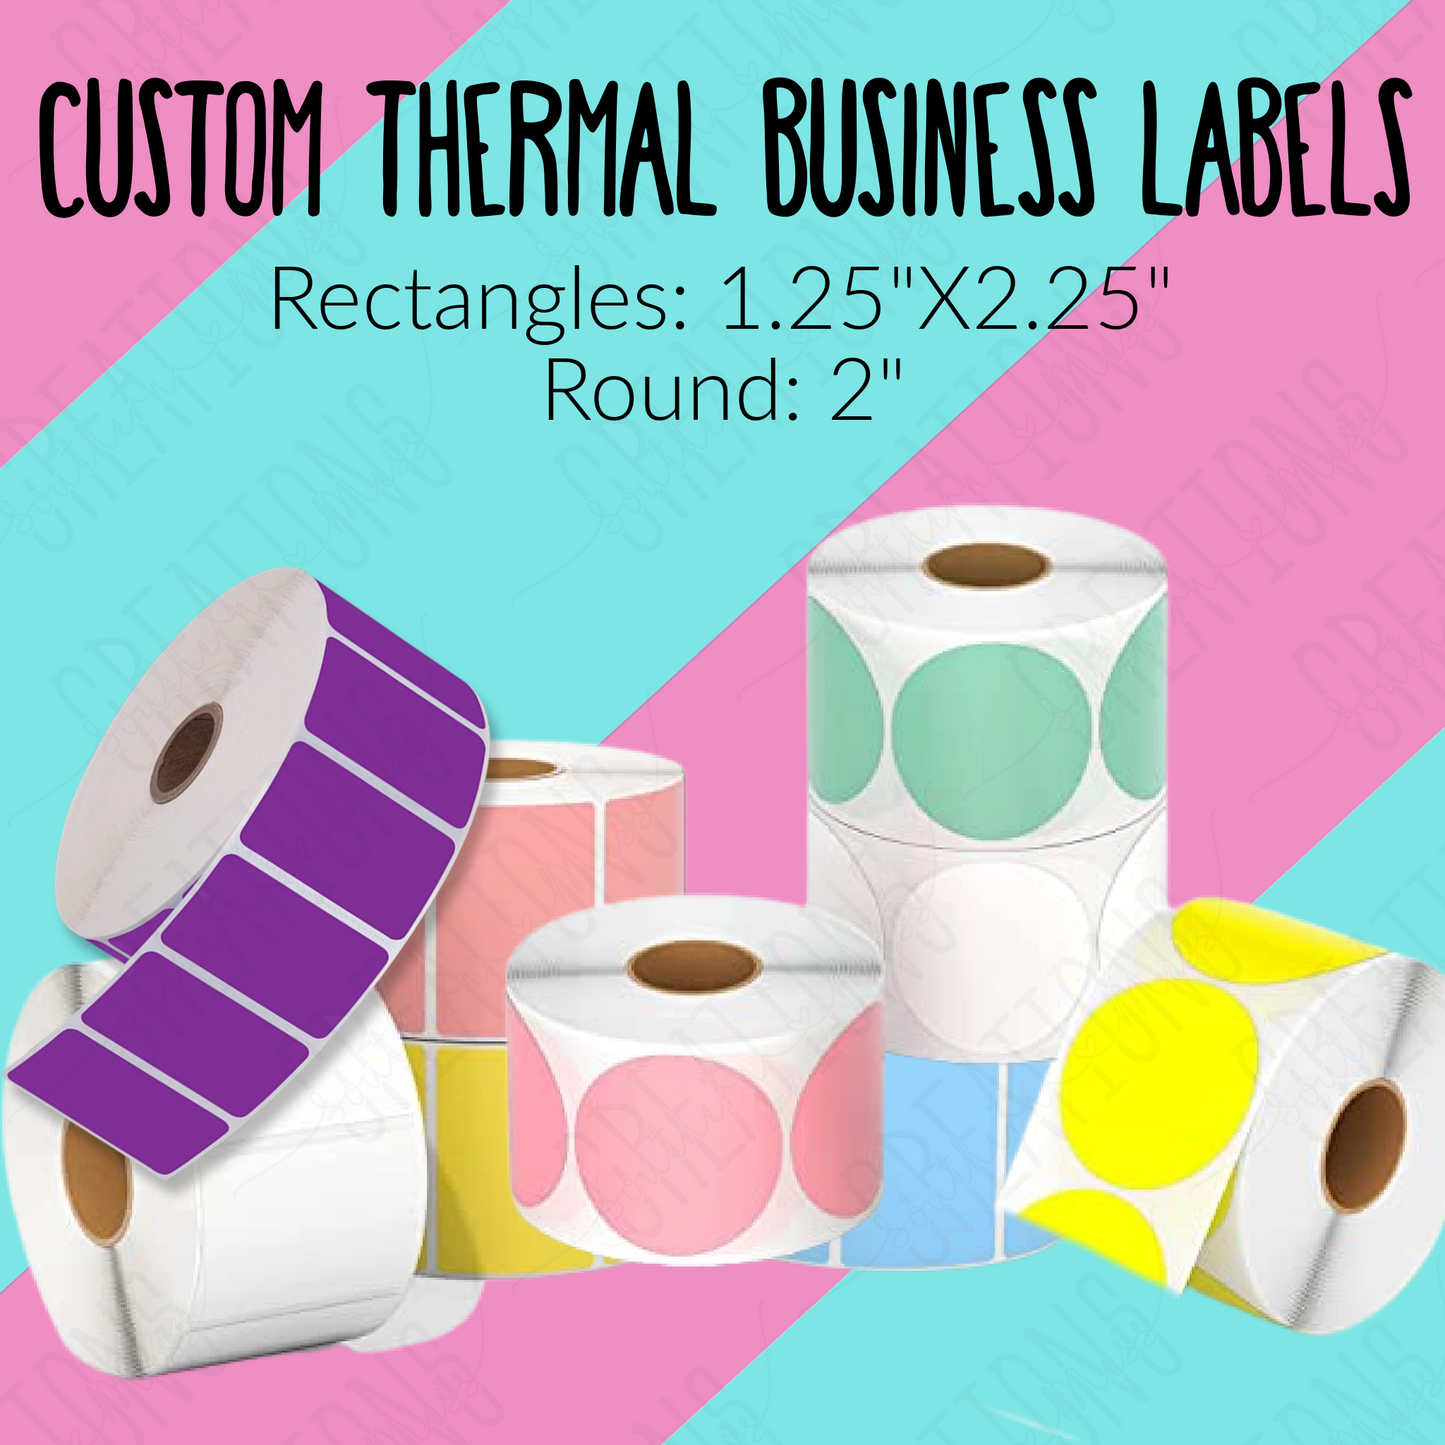 Custom Business Labels